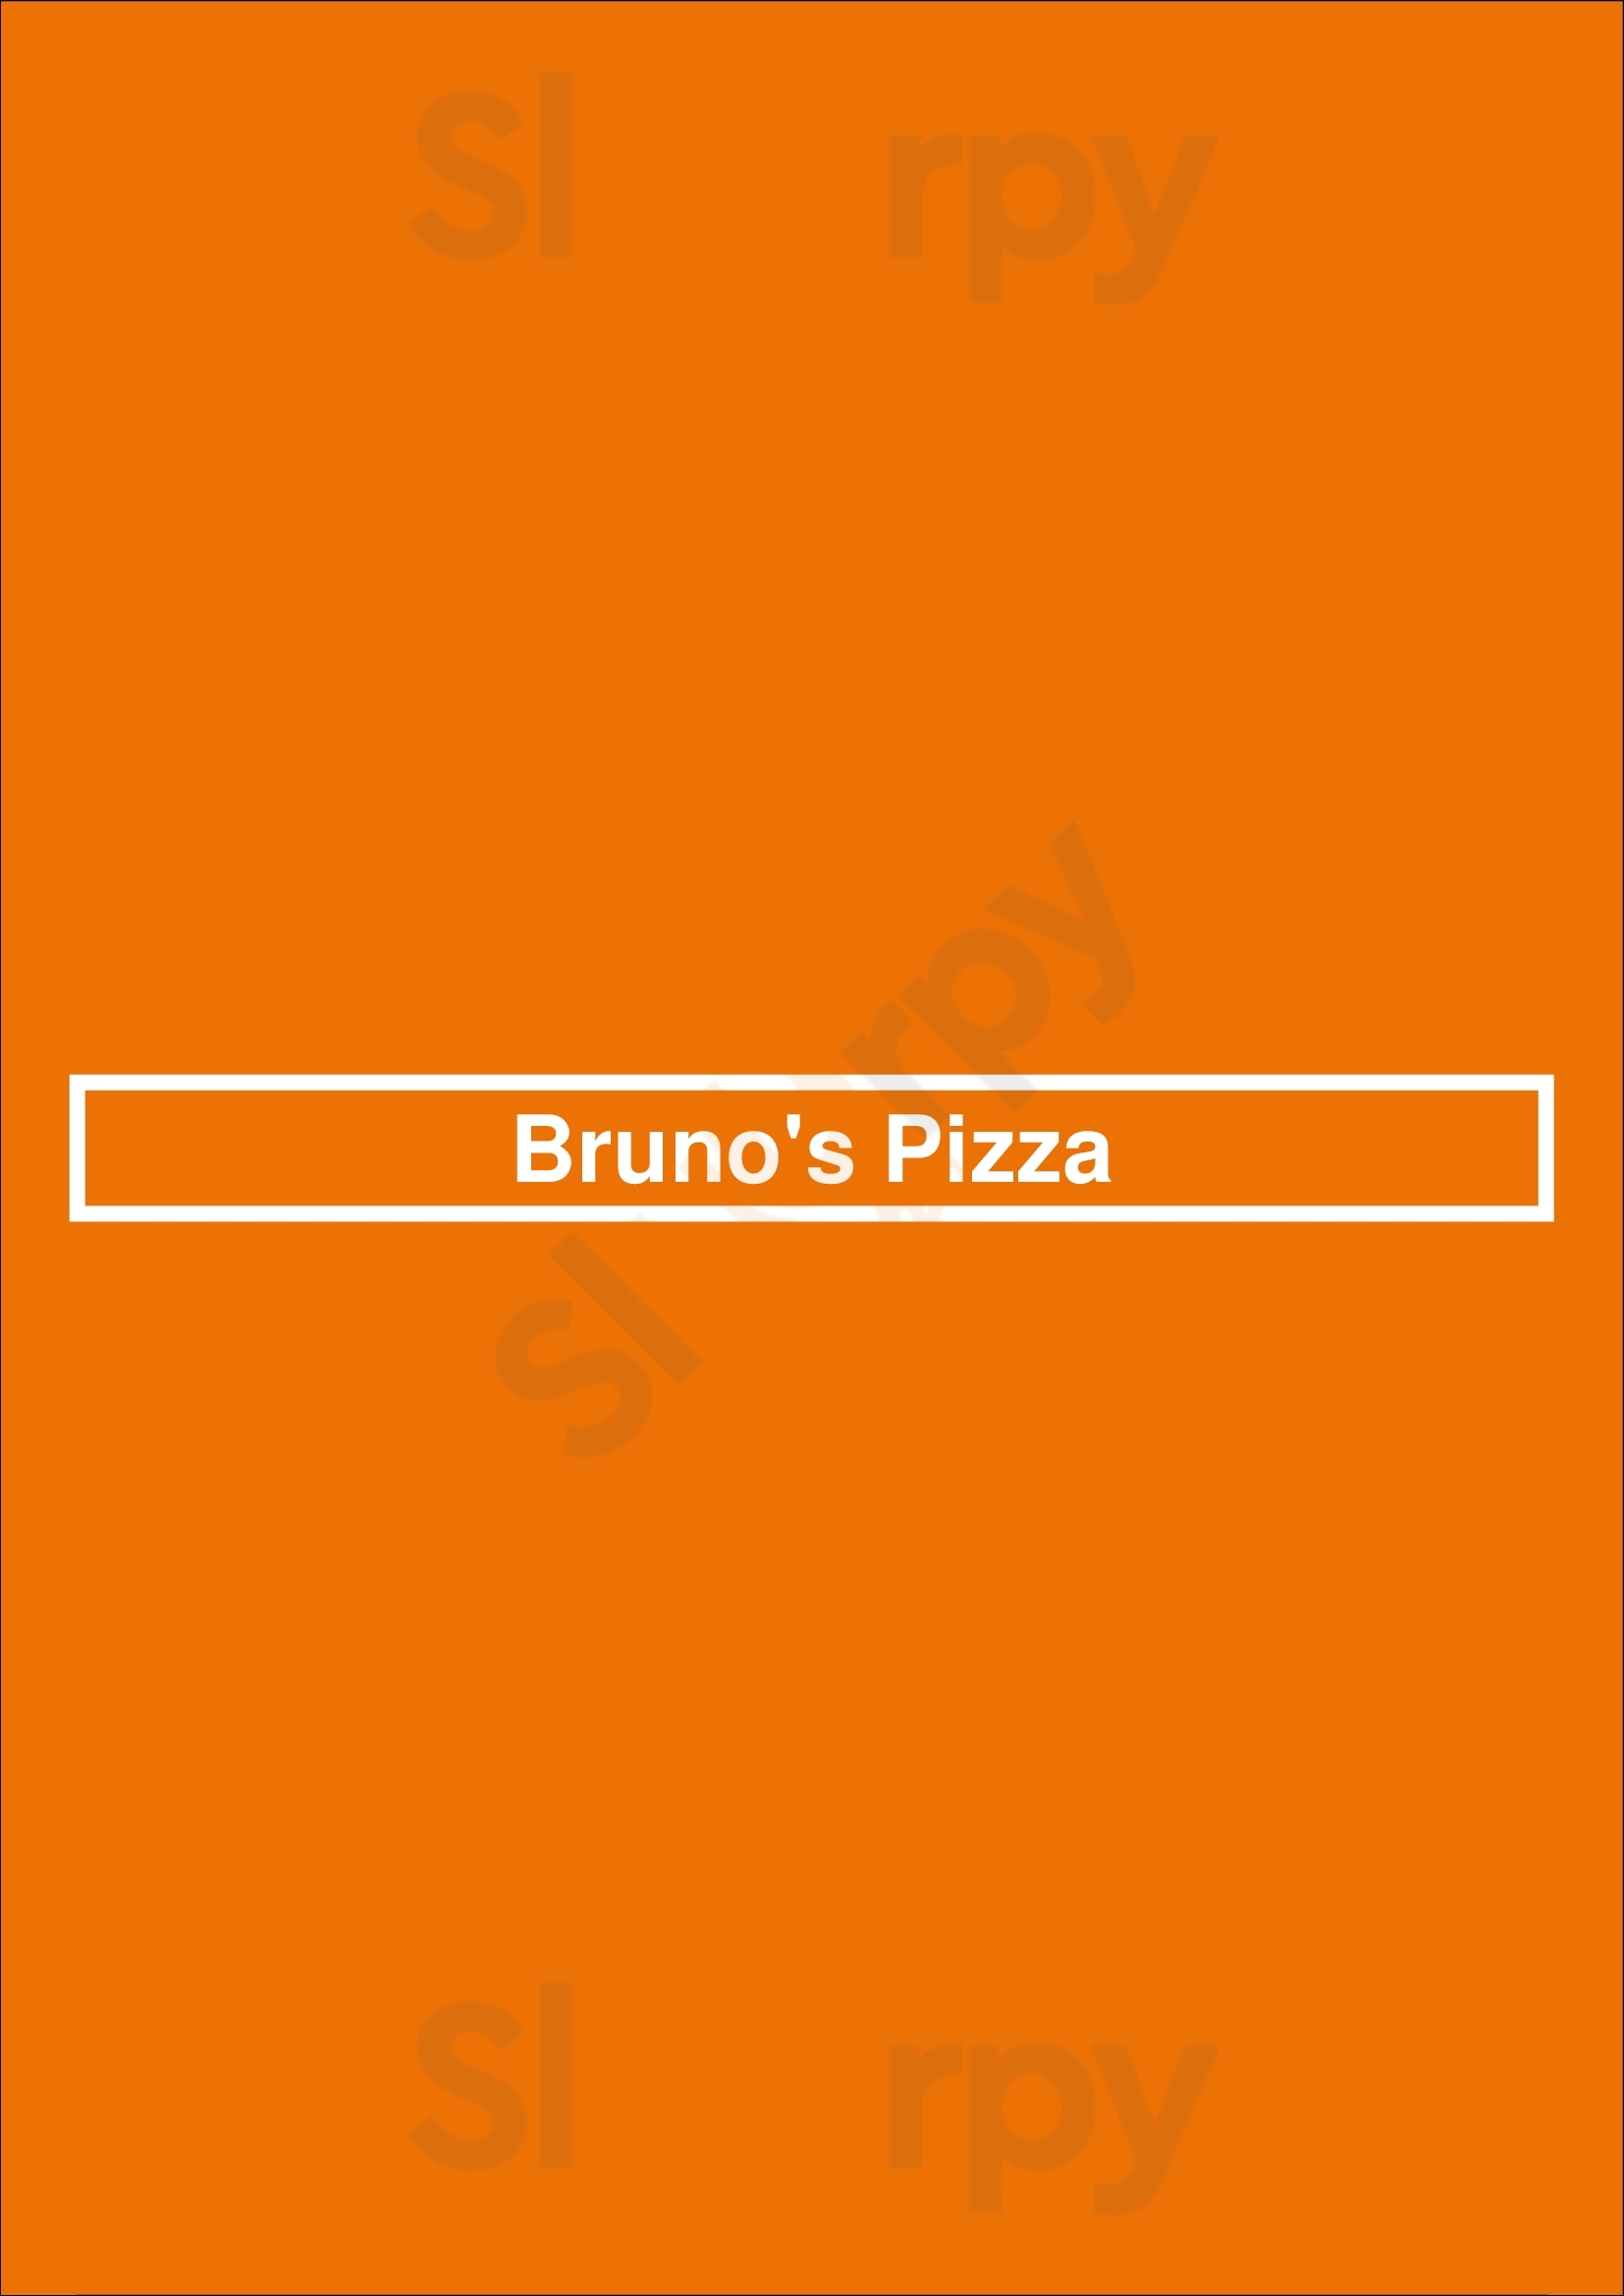 Bruno's Pizza Philadelphia Menu - 1